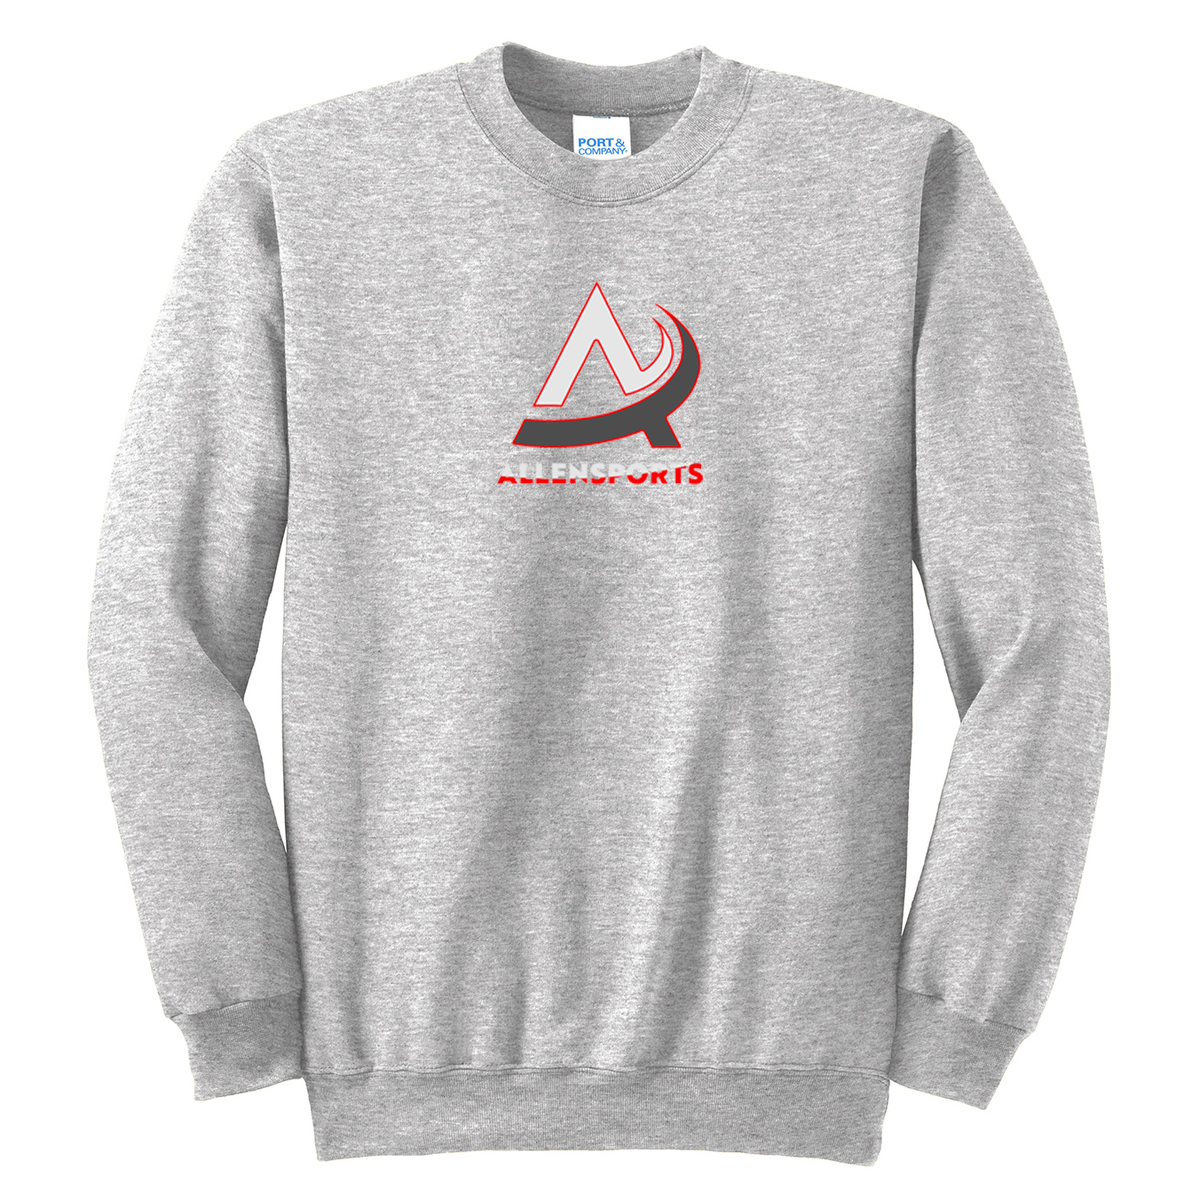 AllenSports Crew Neck Sweater